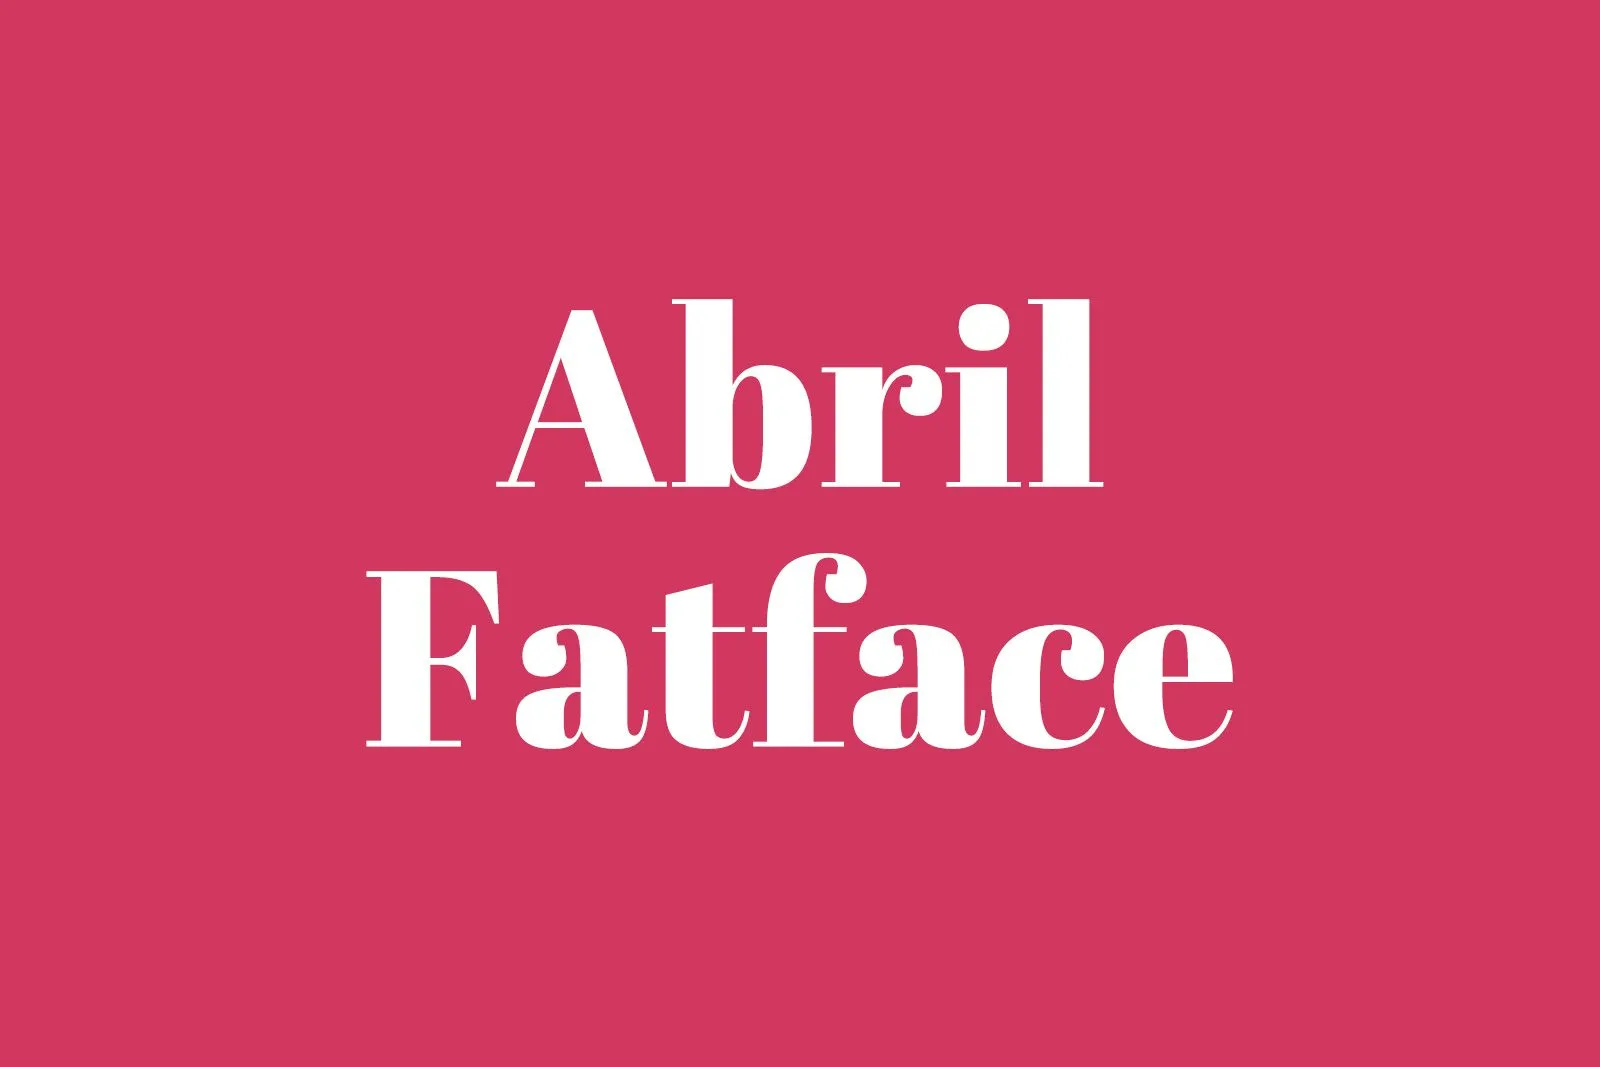 Best font pairings for your Shopify:: Abril fatface + open sans